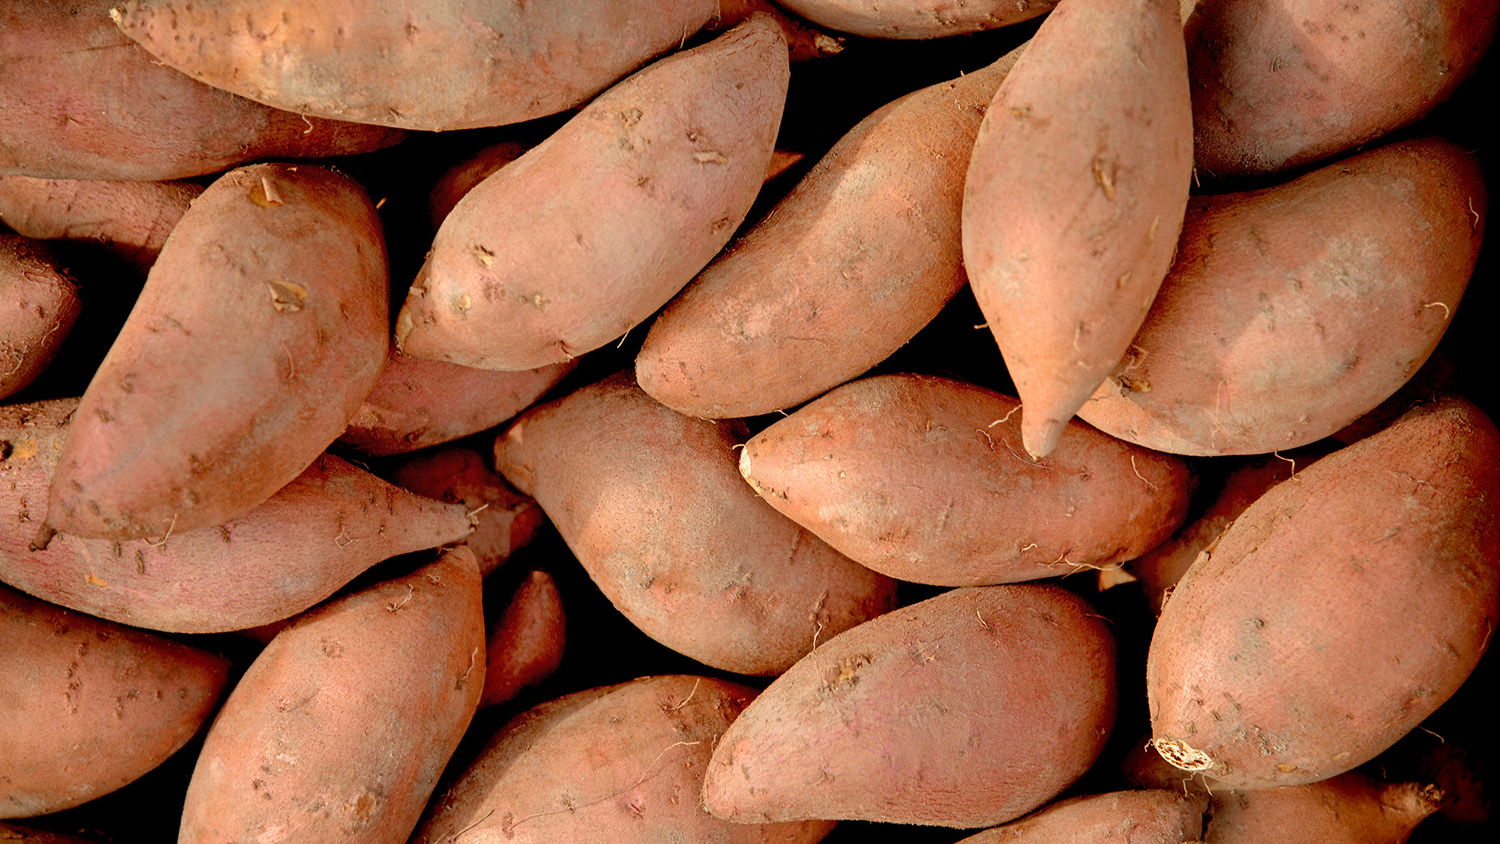 image of sweet potatoes up-close